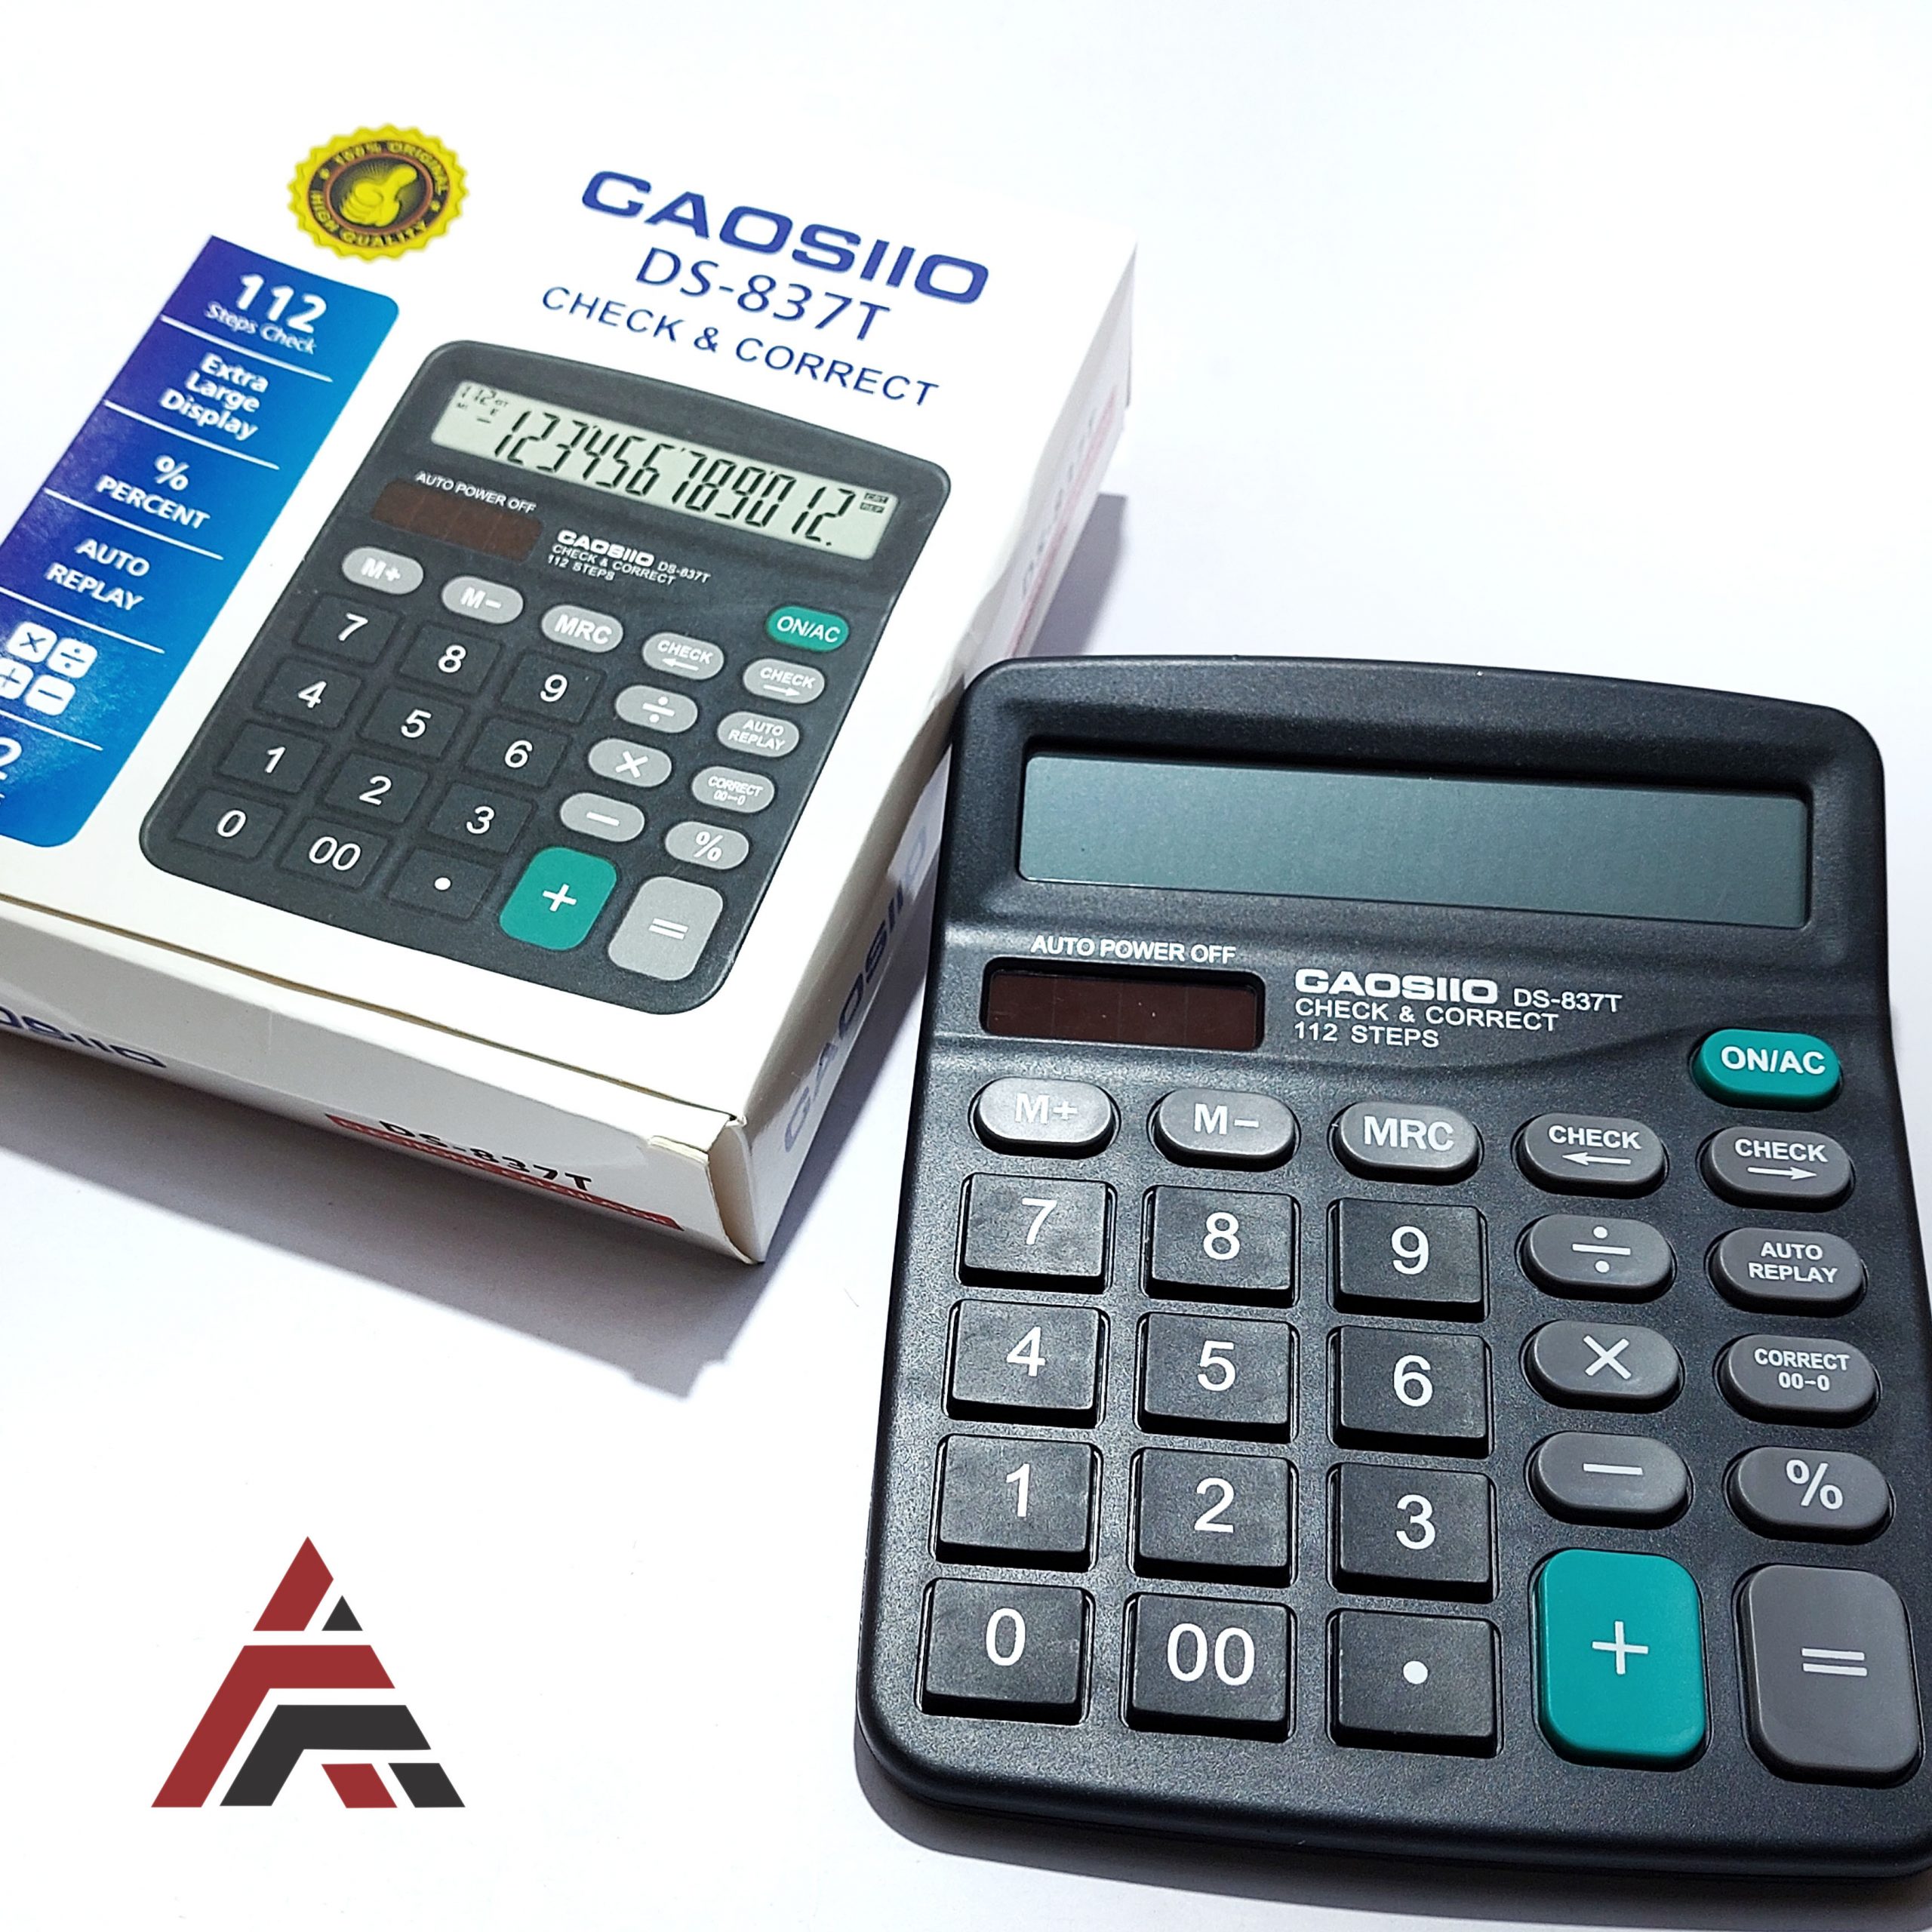 Caossio Electronic Calculator DS-837T